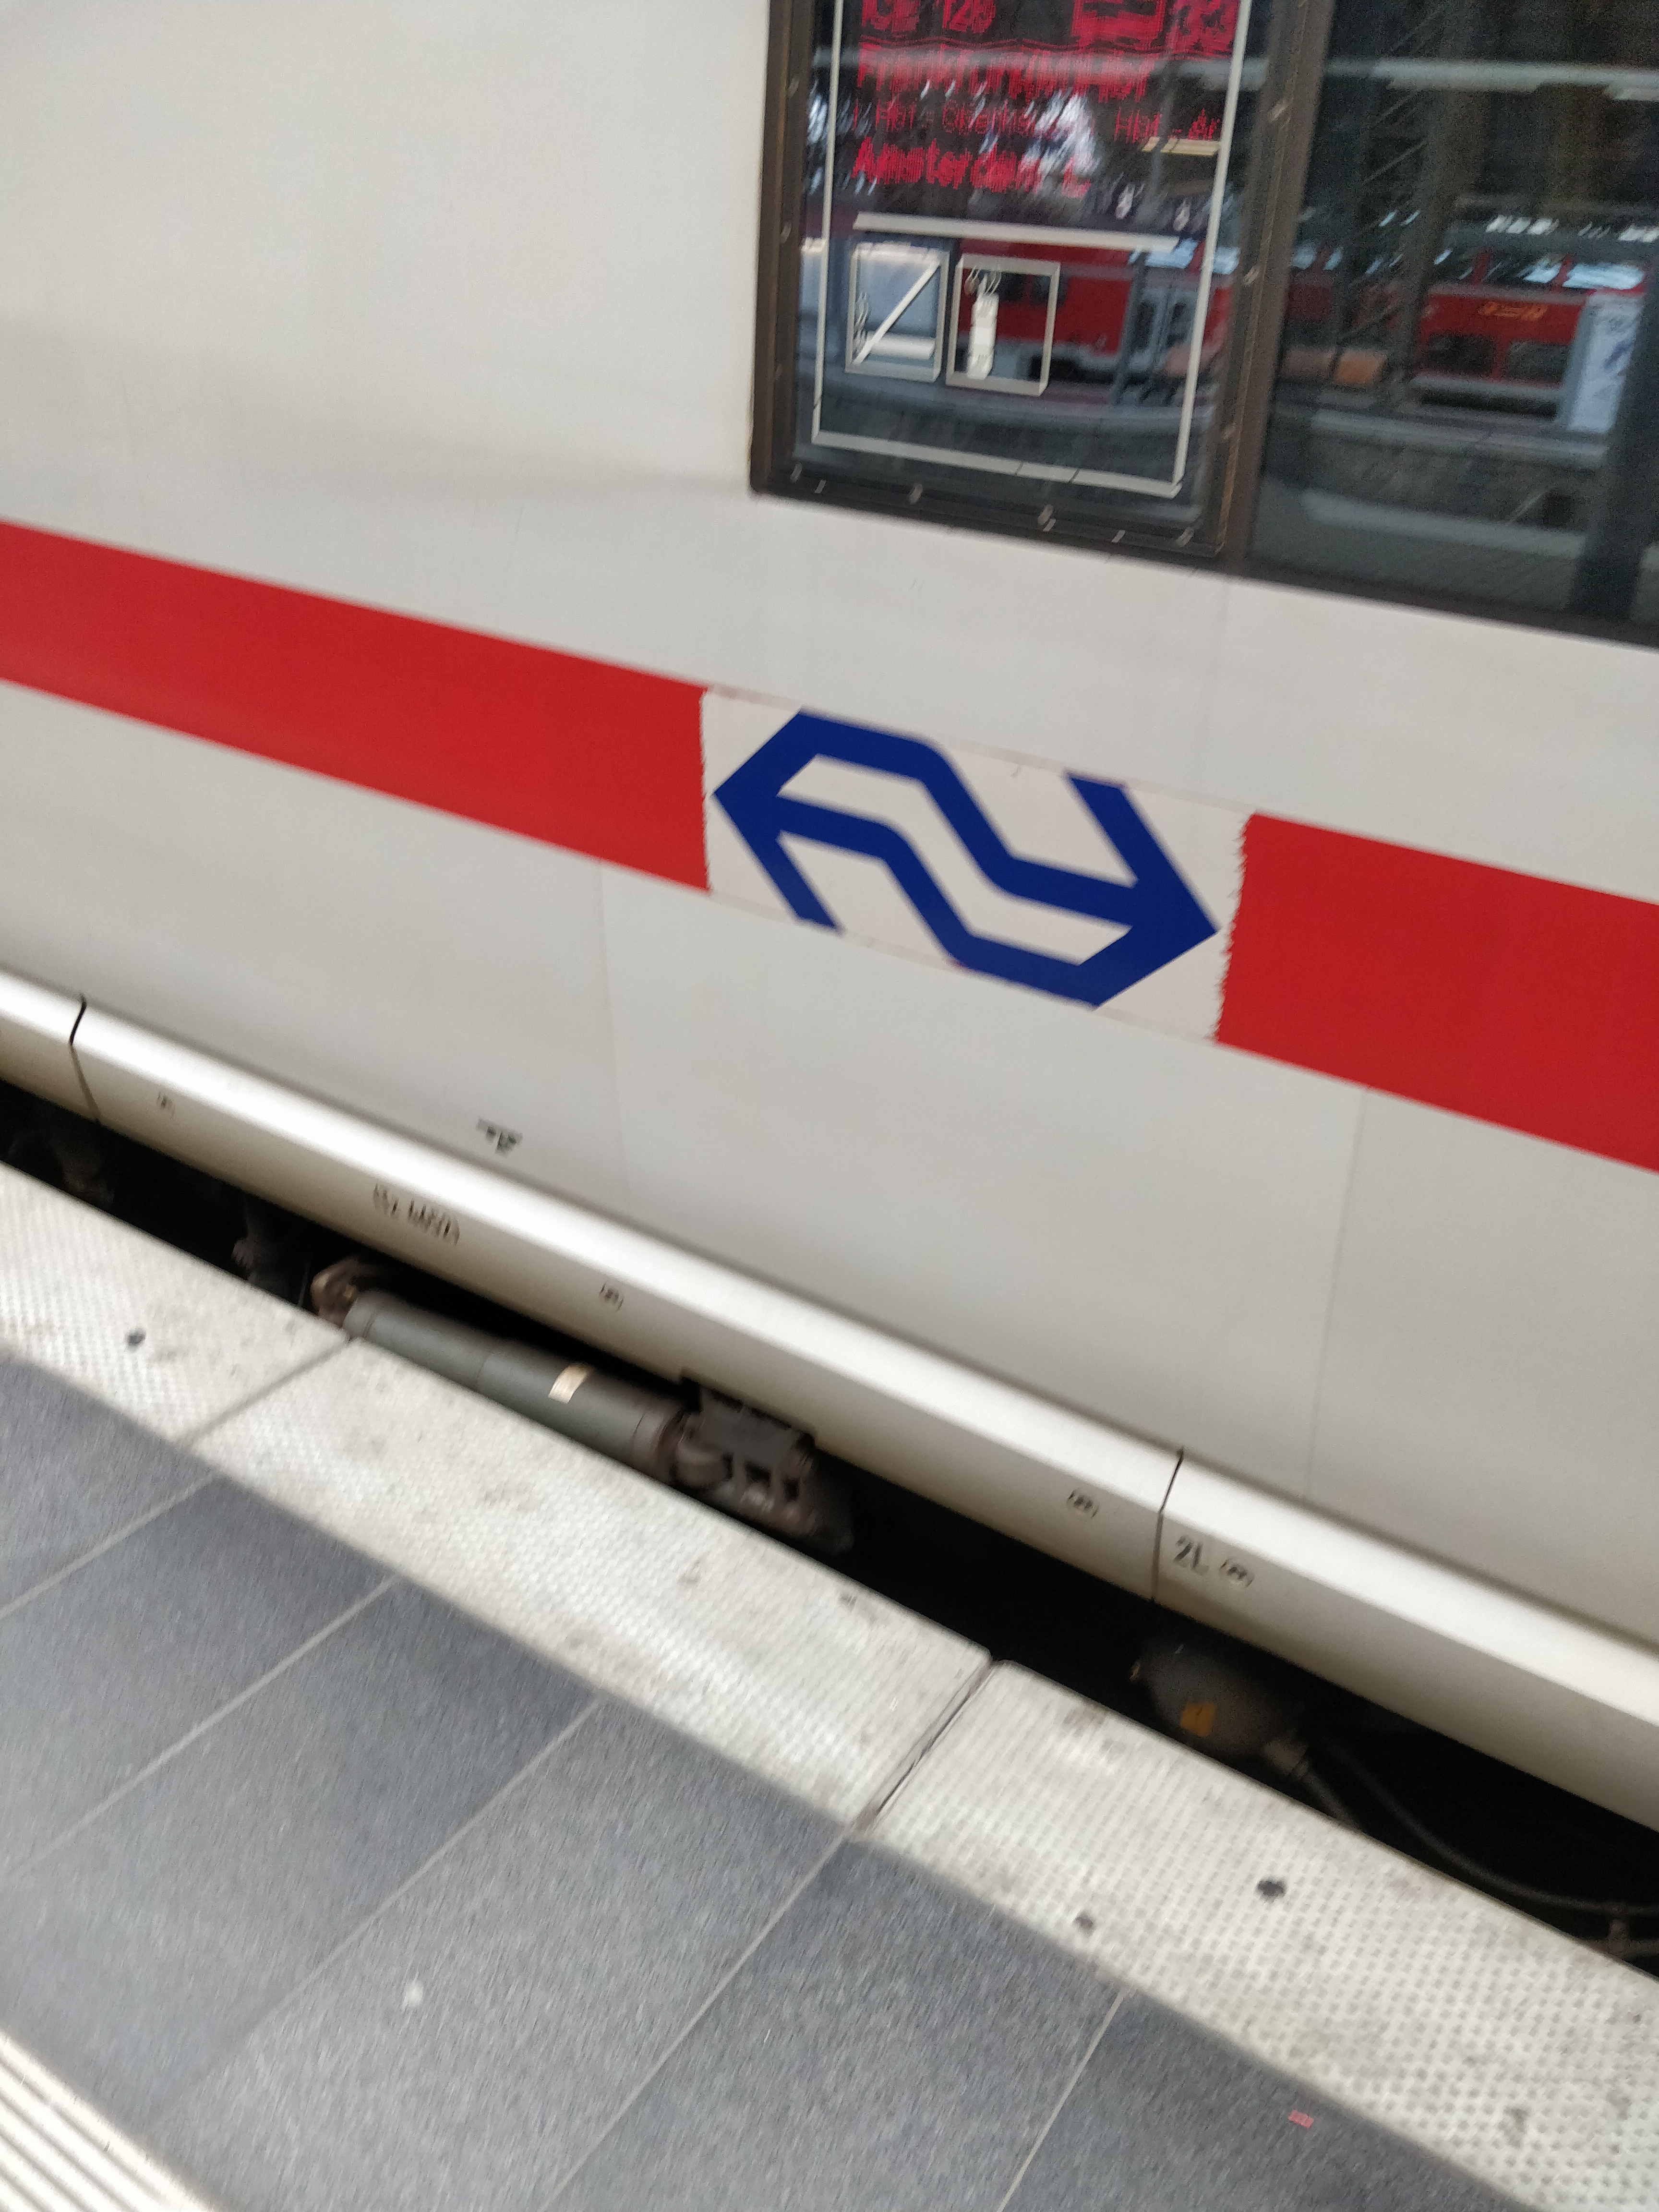 ICE train with NS logo